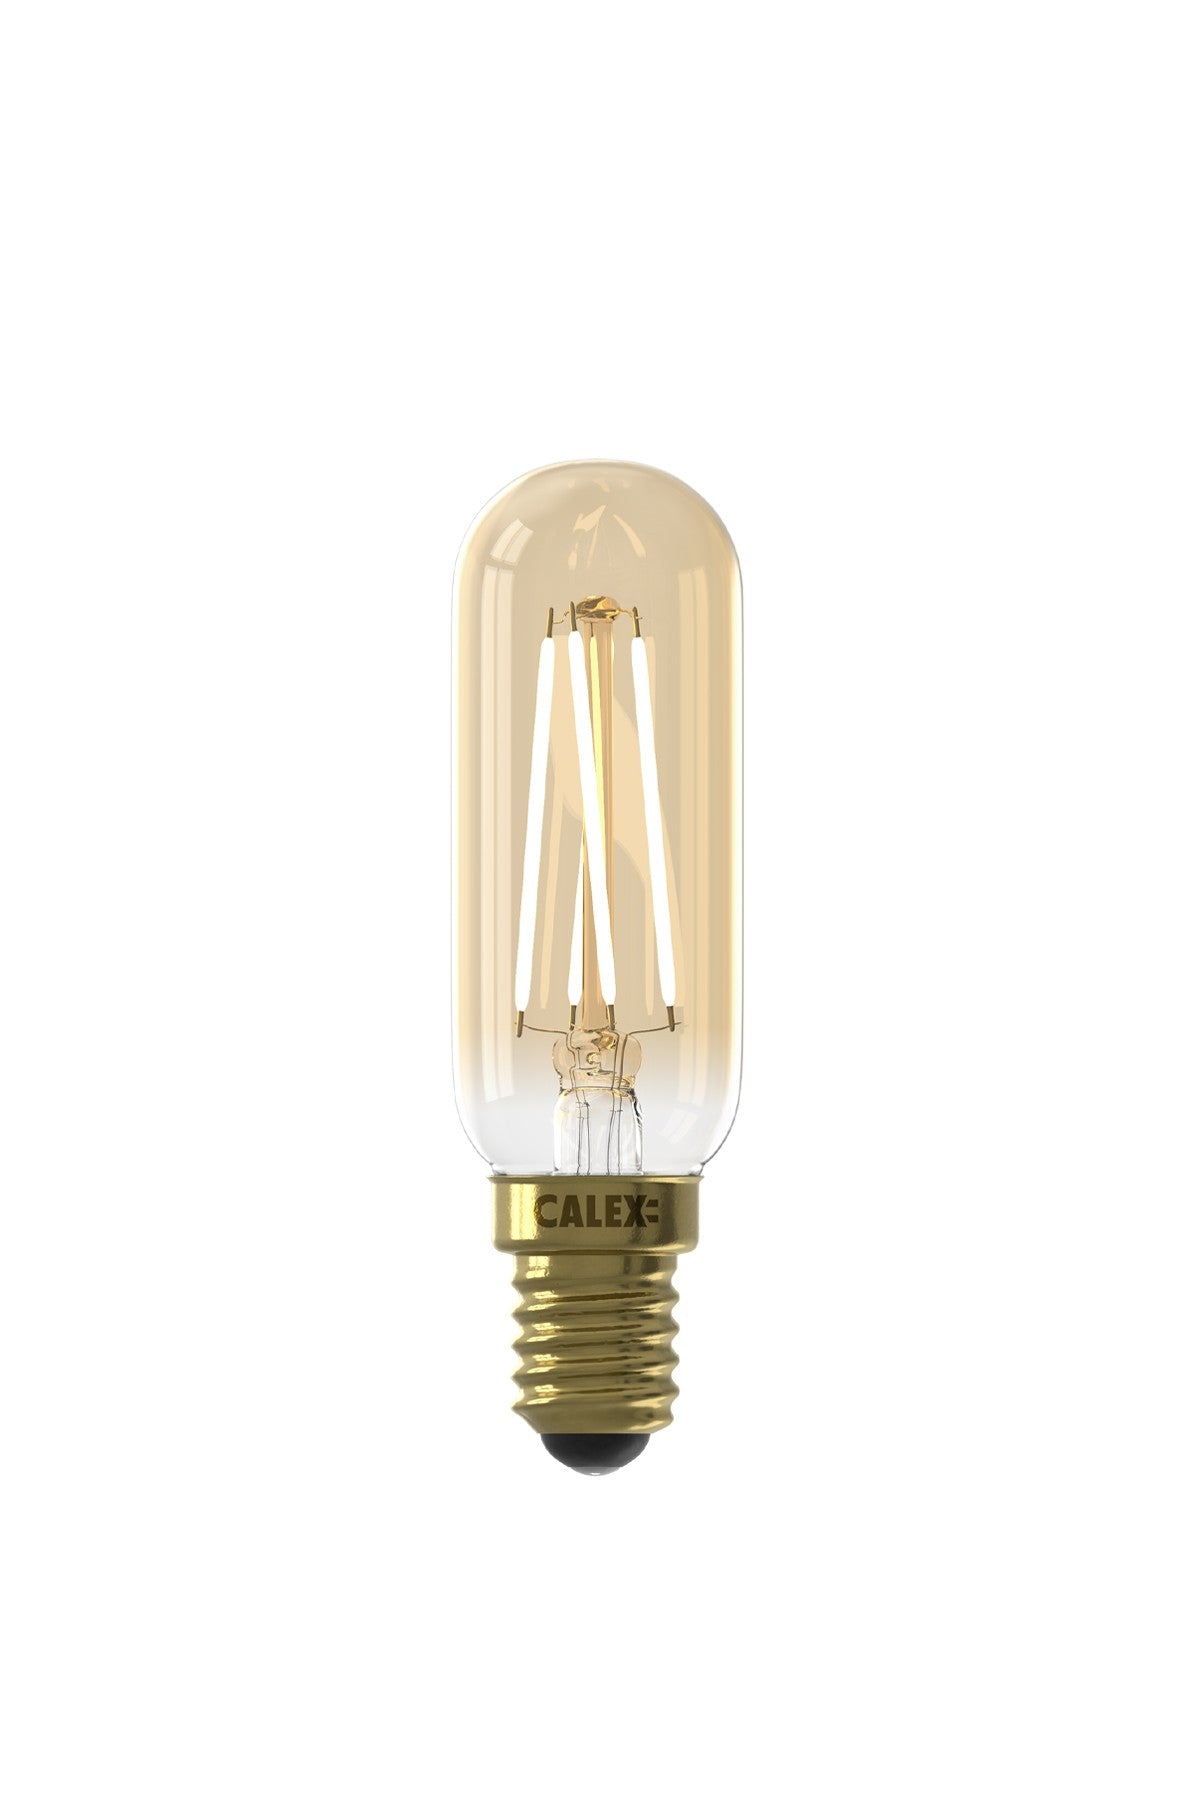 tilgivet omdrejningspunkt Rug Calex 425498 - Dimmable Filament LED Tube Lamp 240V 3,5W E14 – The Lamp  Company